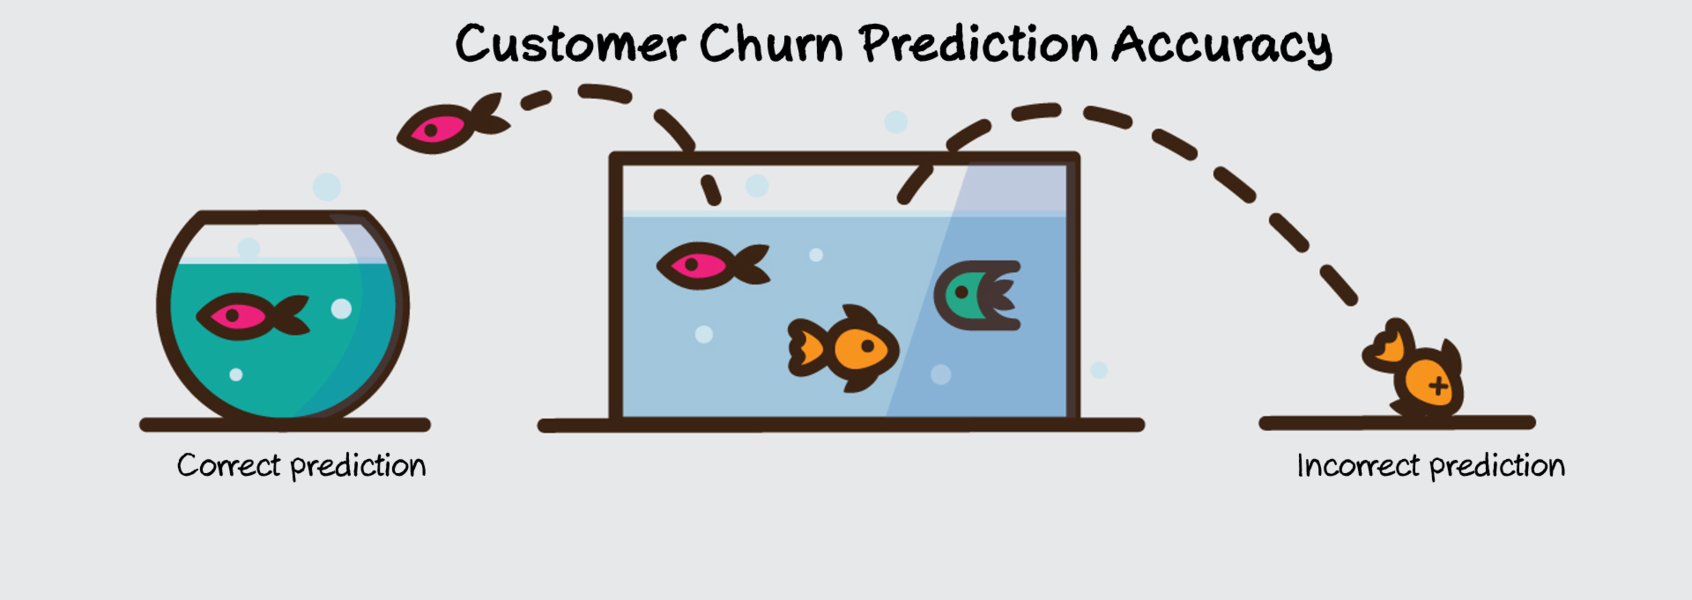 Customer Churn Prediction Accuracy